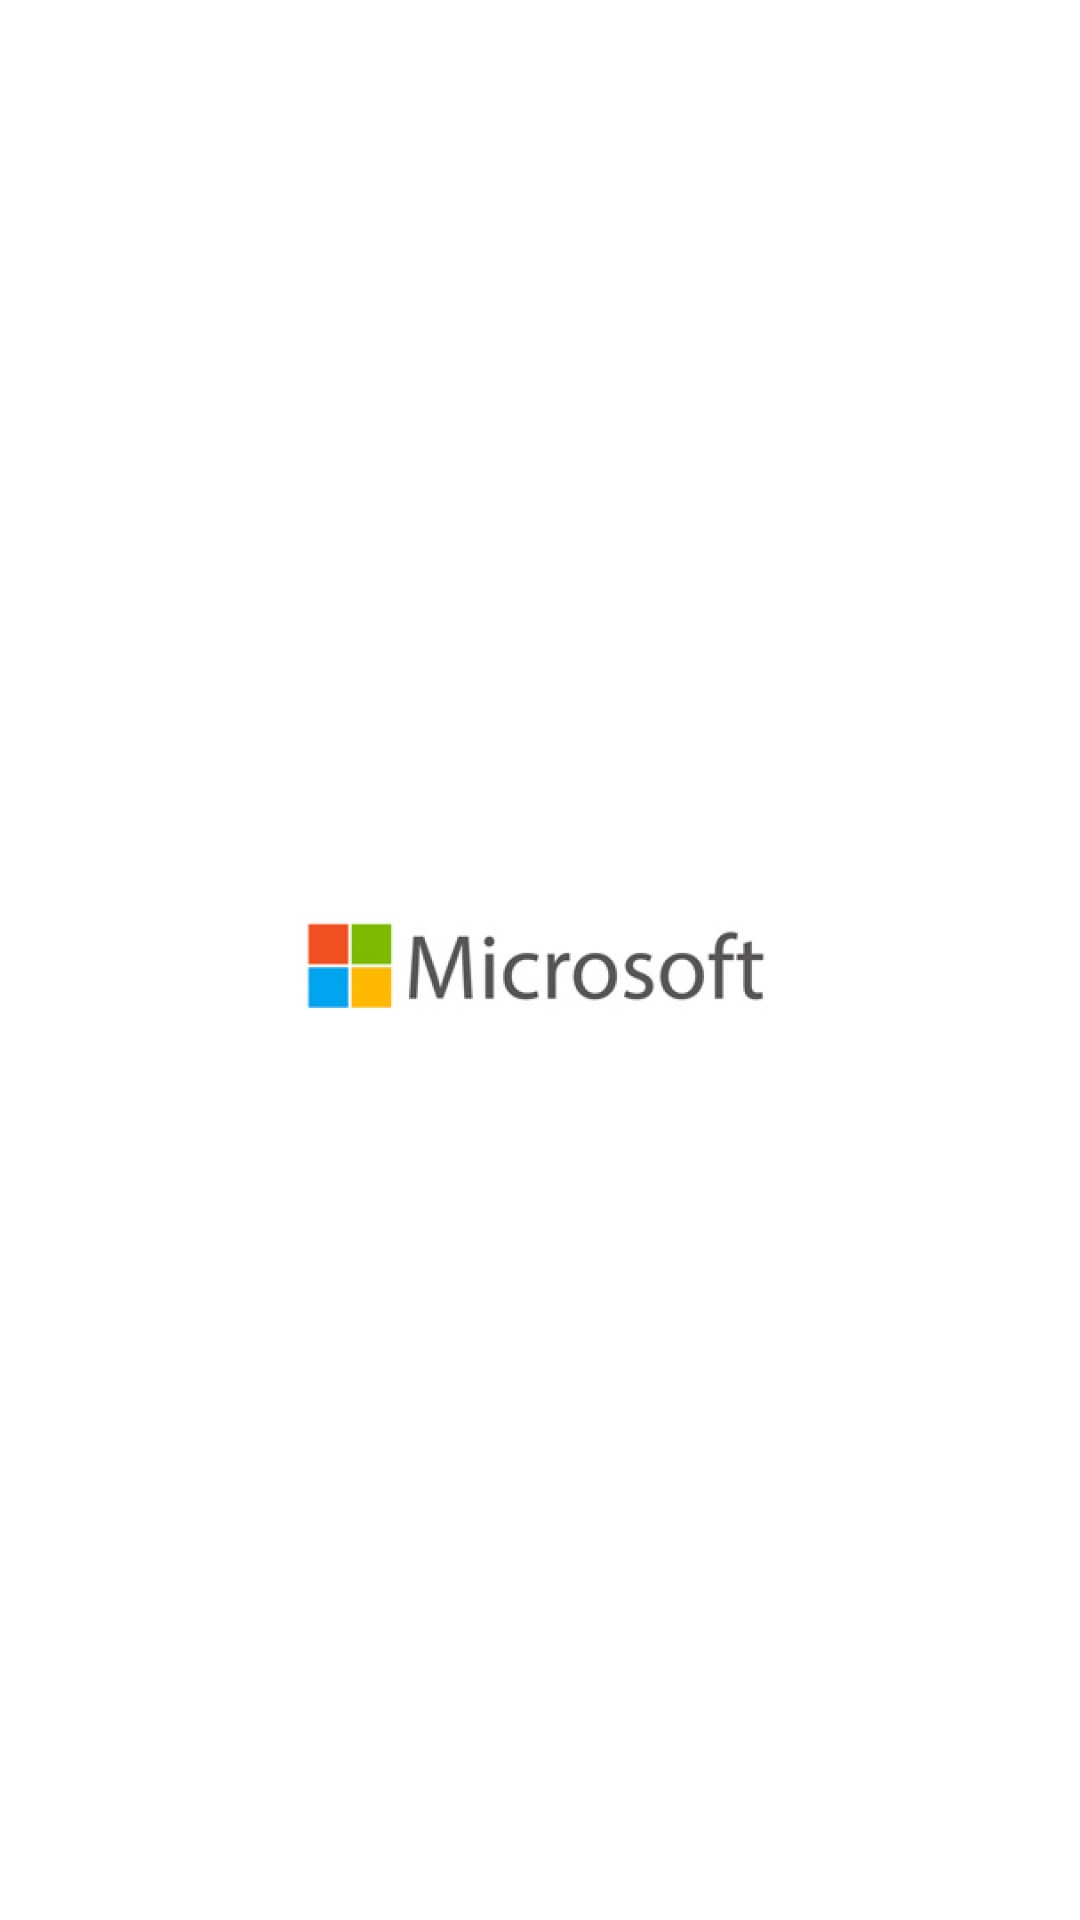 Download Free Microsoft Logo Wallpaper for Desktop and Mobiles iPhone 6 / 6S Plus